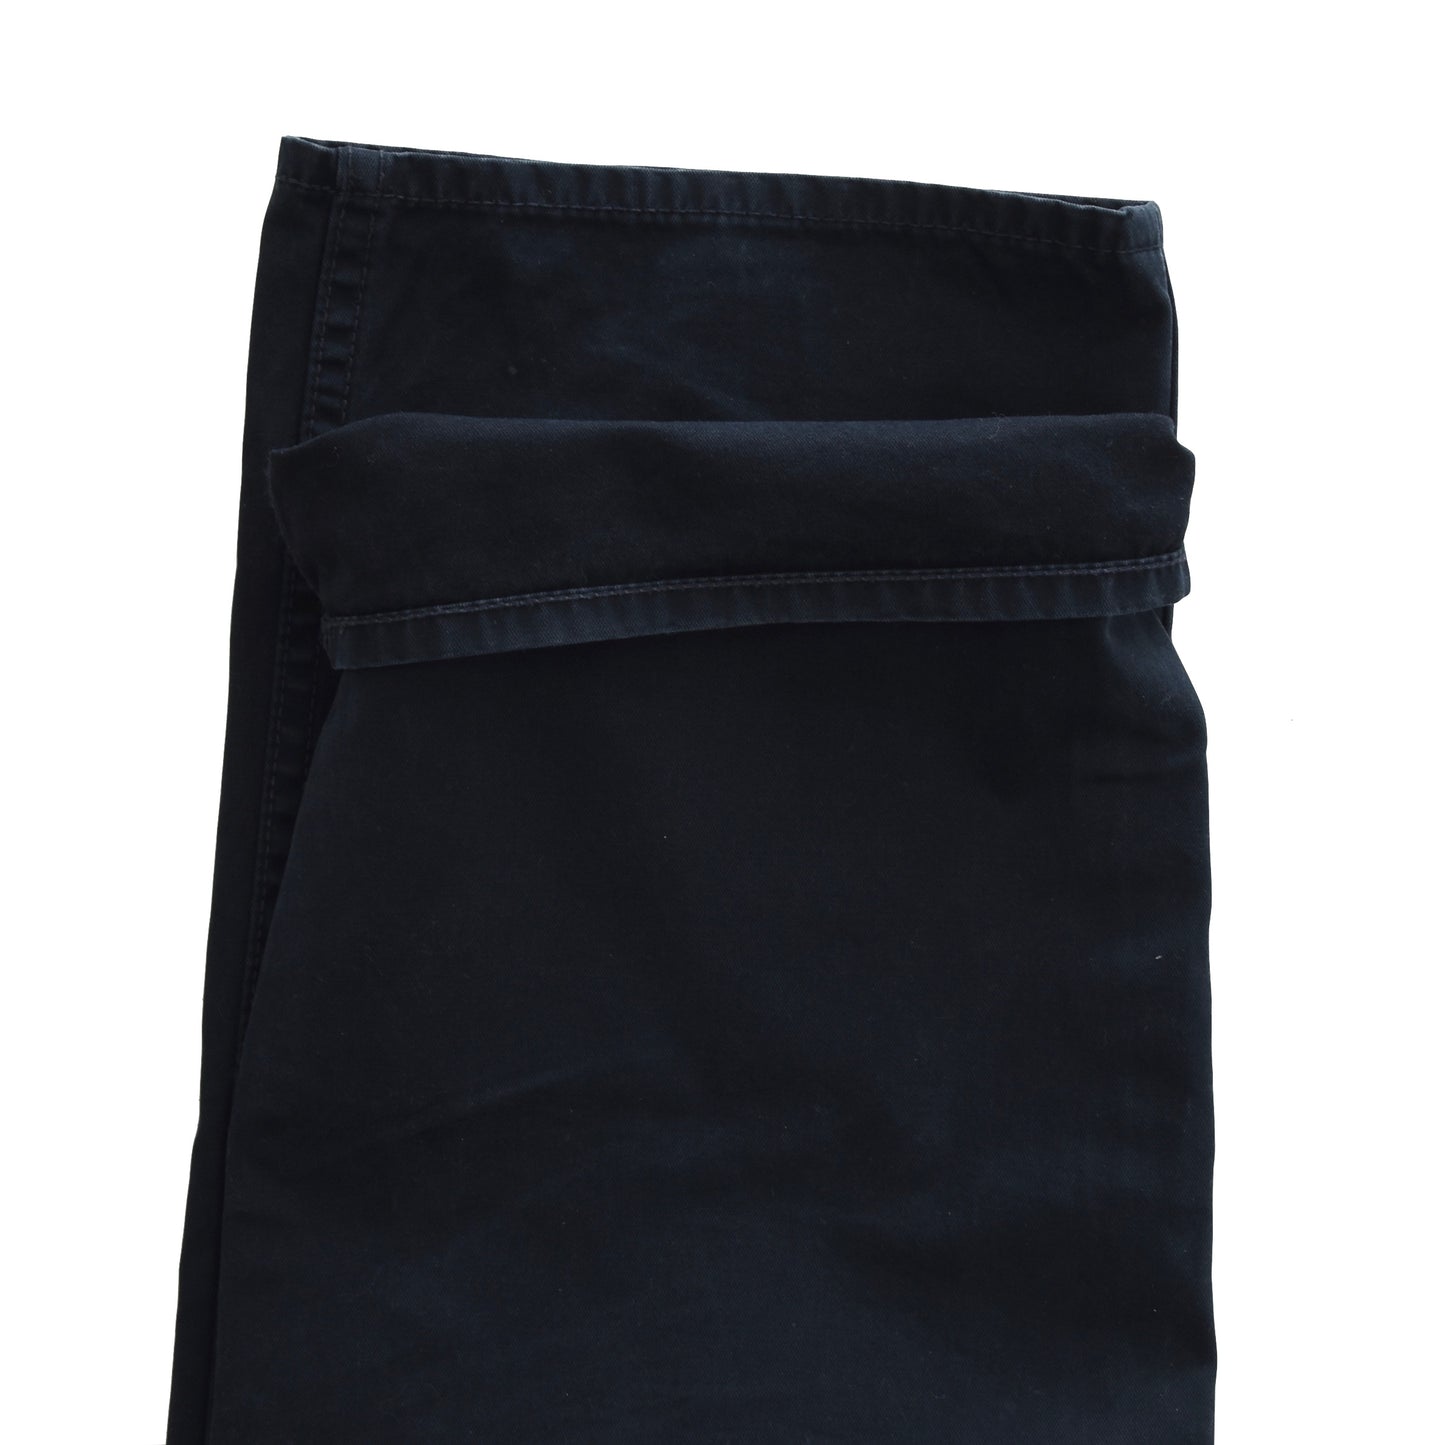 Polo Ralph Lauren Dungarees/Pants Size 32/32 - Navy Blue